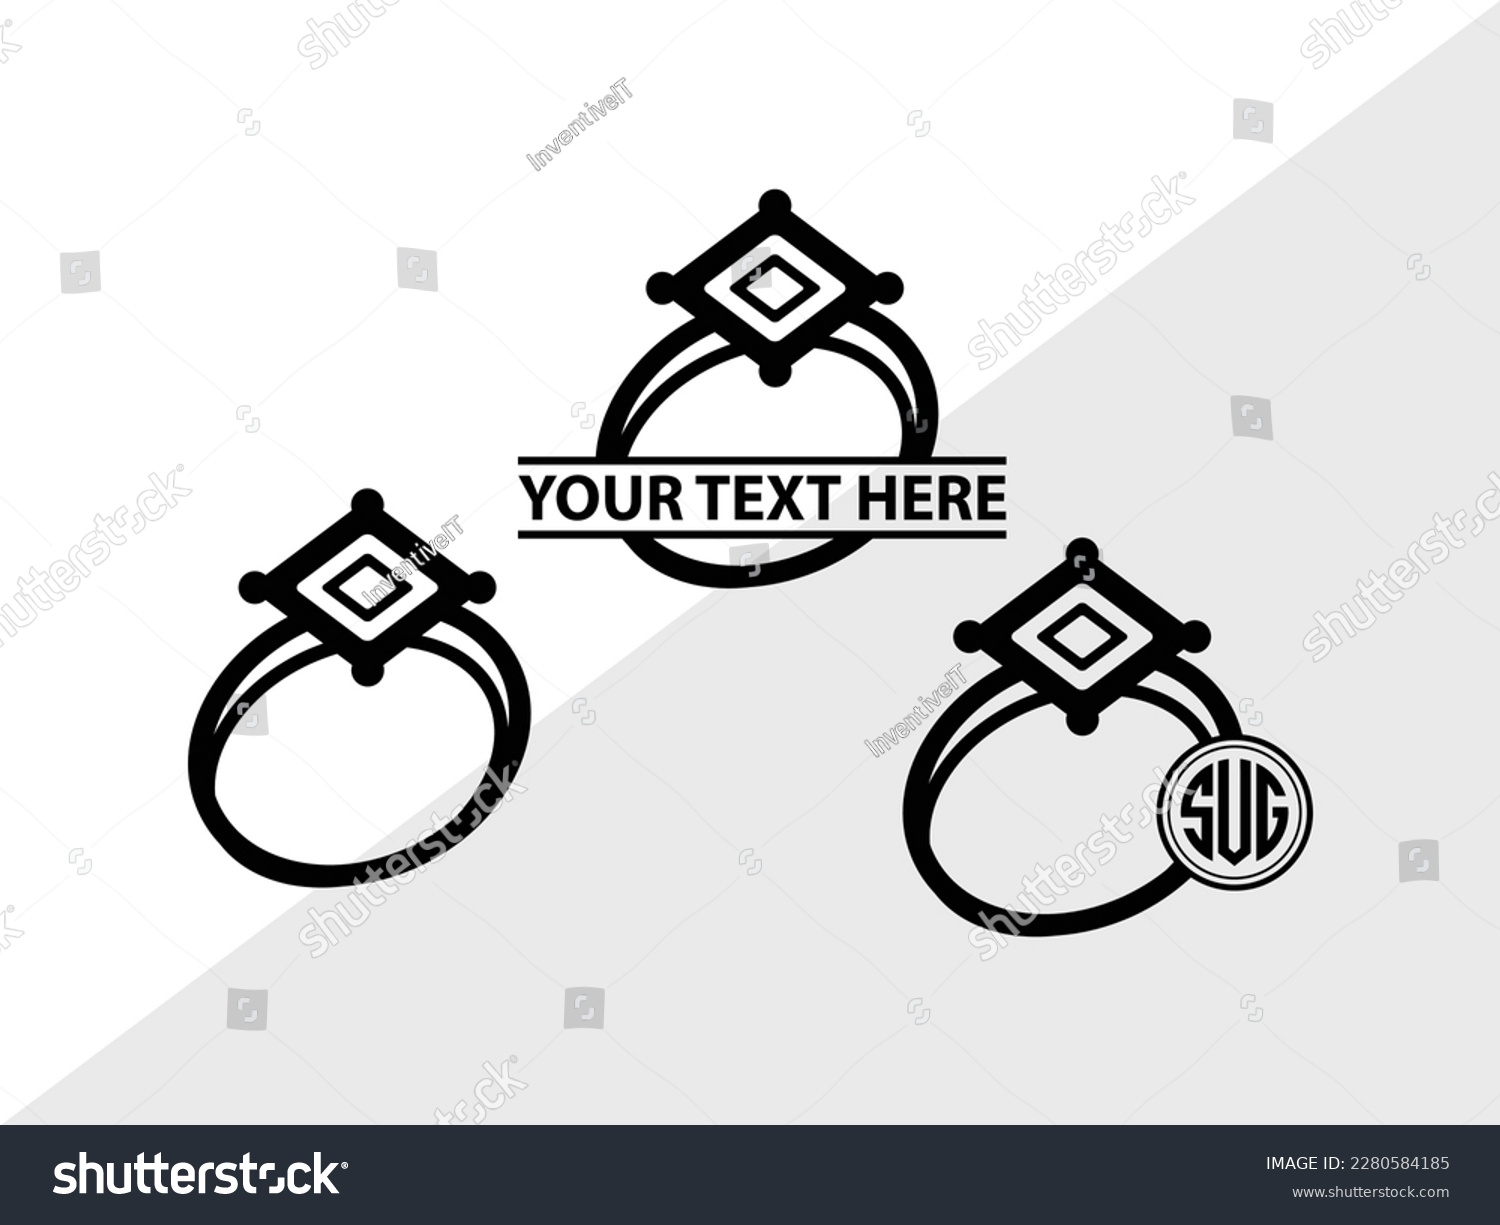 SVG of Wedding Ring Monogram Vector Illustration Silhouette svg